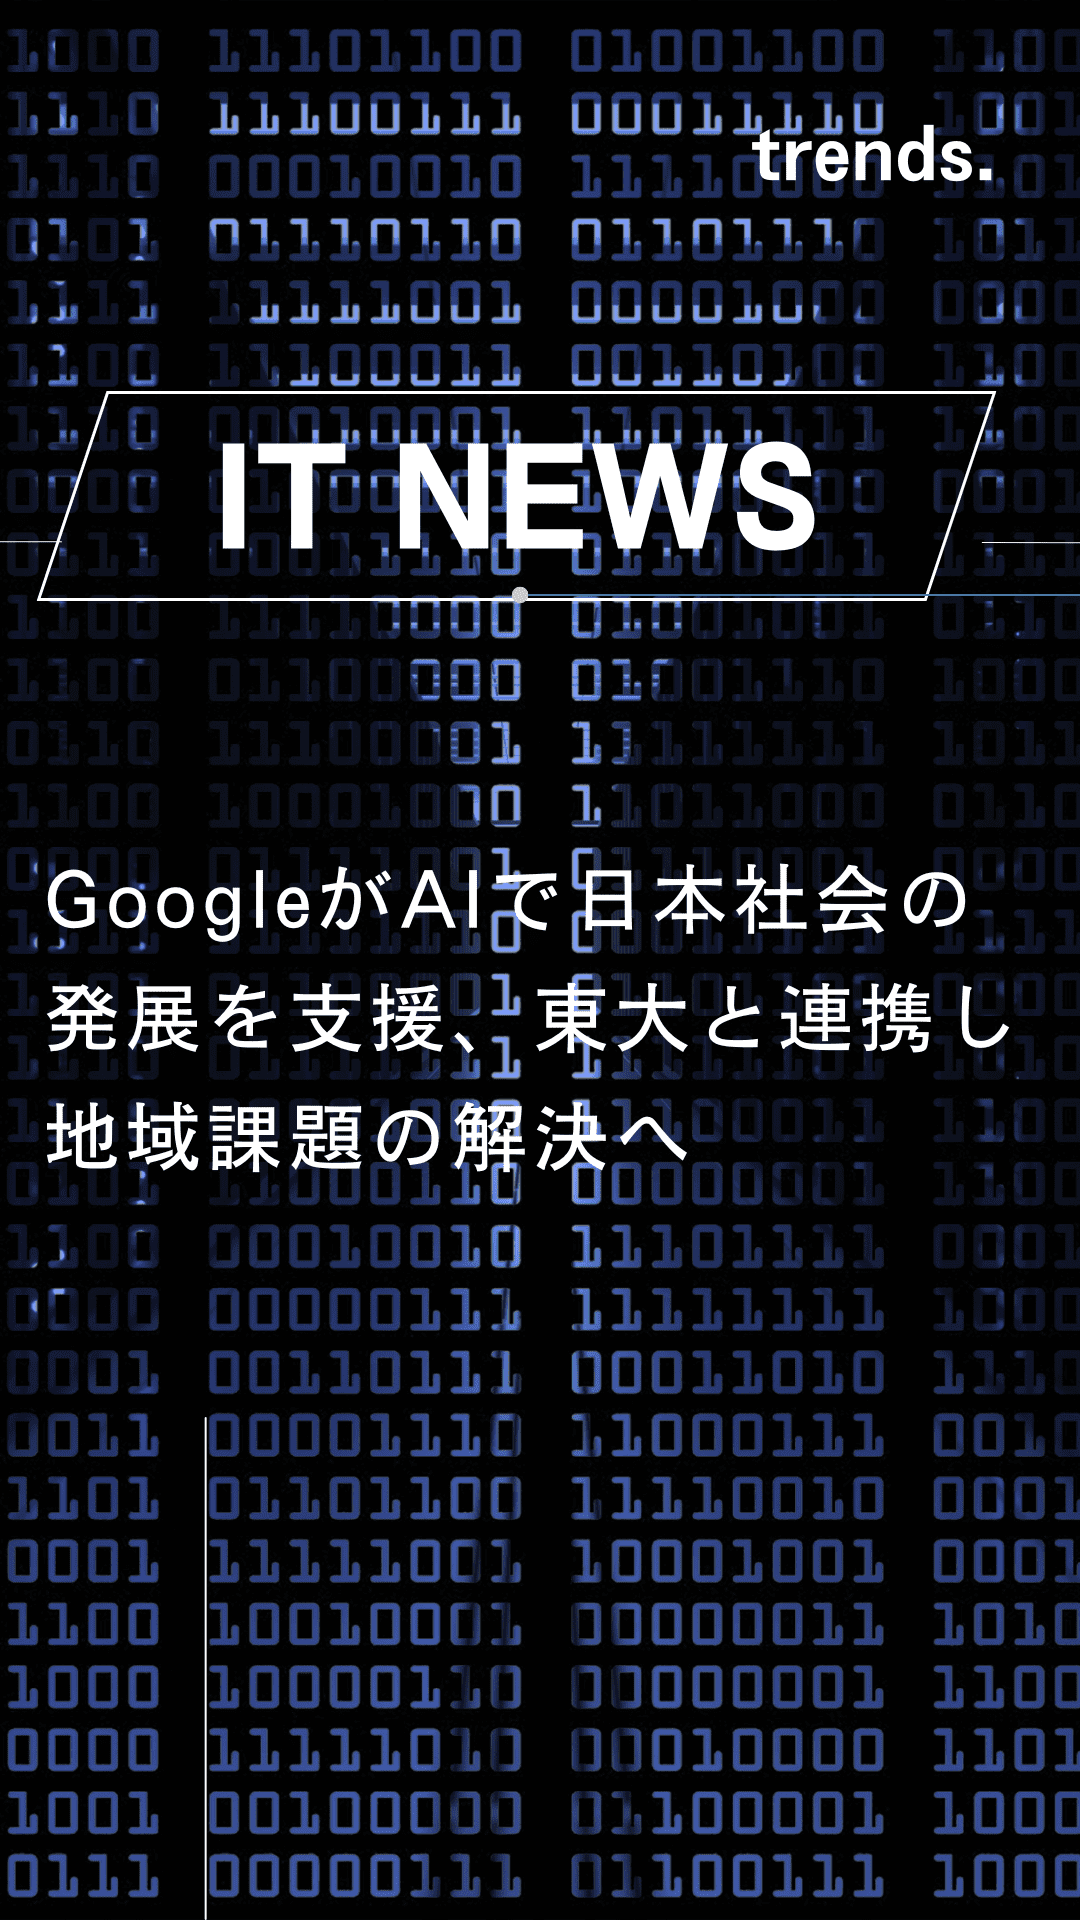 GoogleがAIで日本社会の発展を支援、東大と連携し地域課題の解決へ